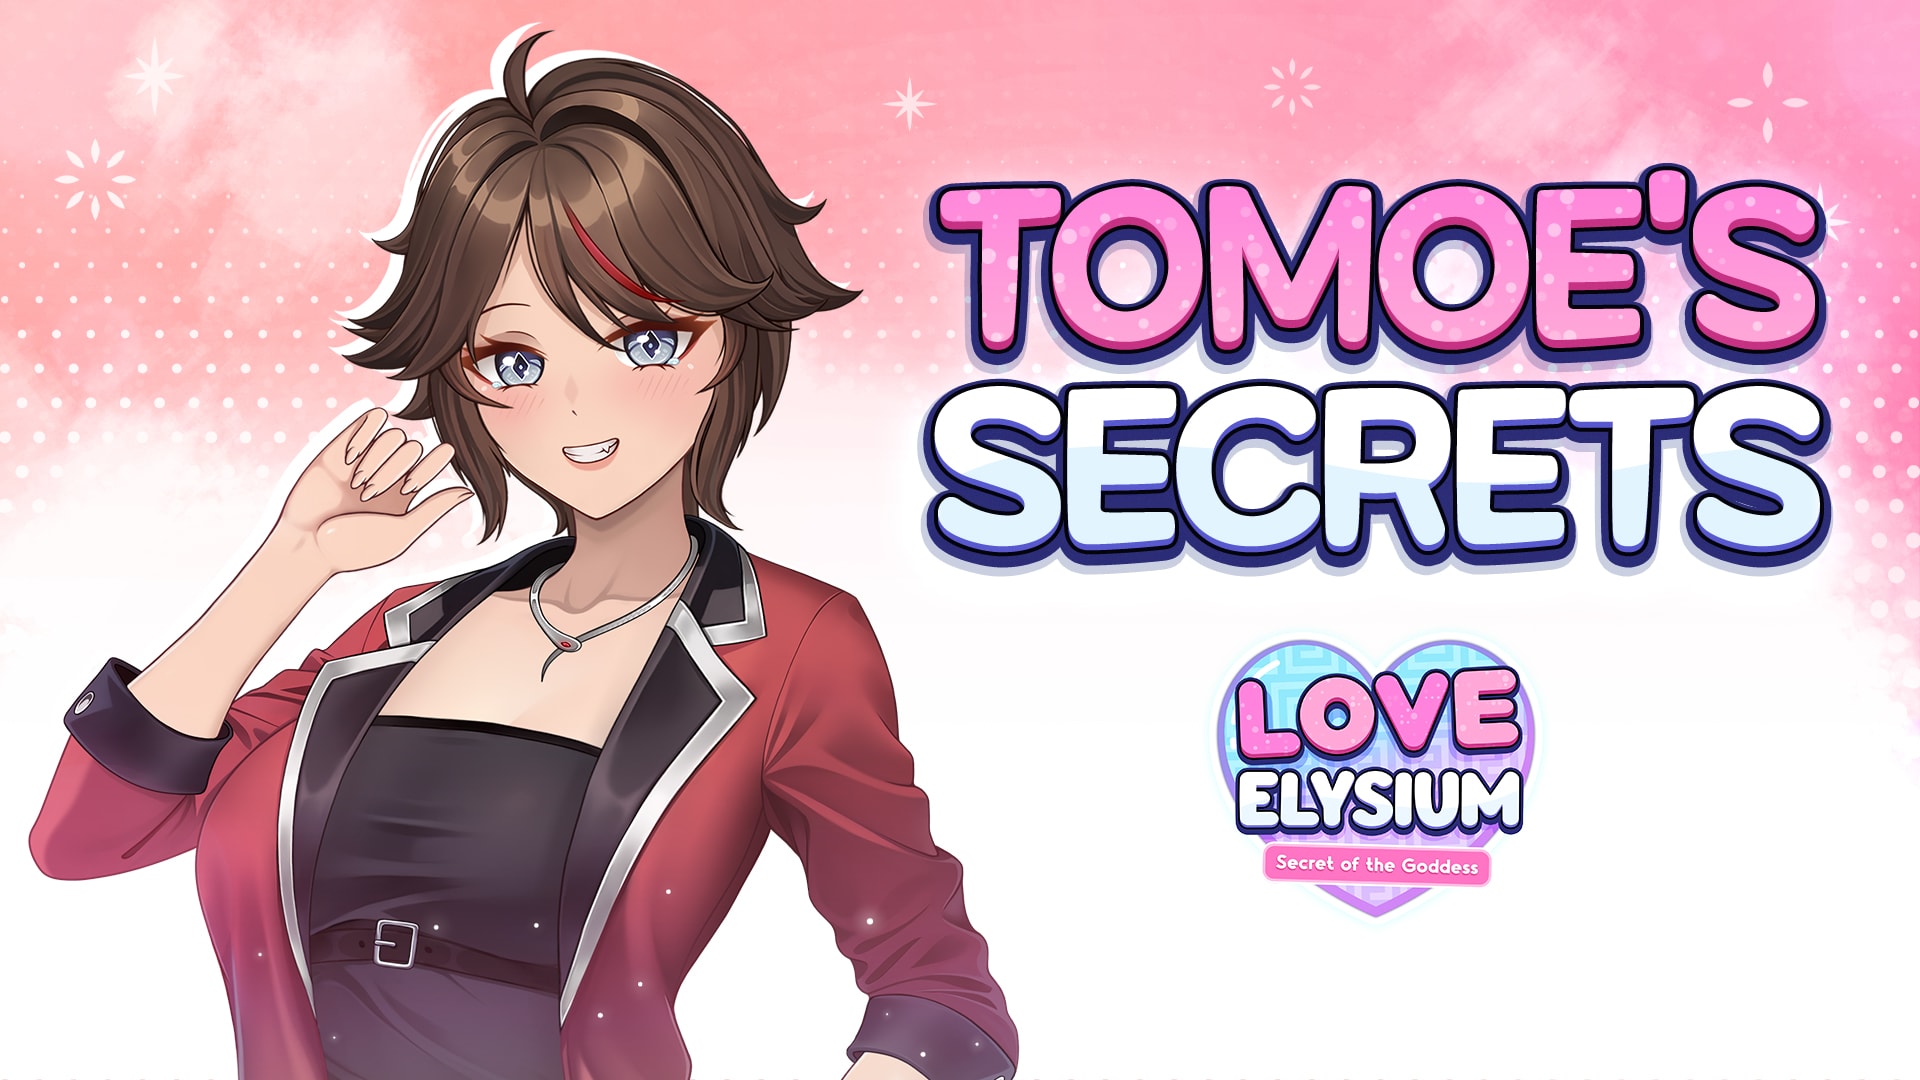 Tomoe's Secrets